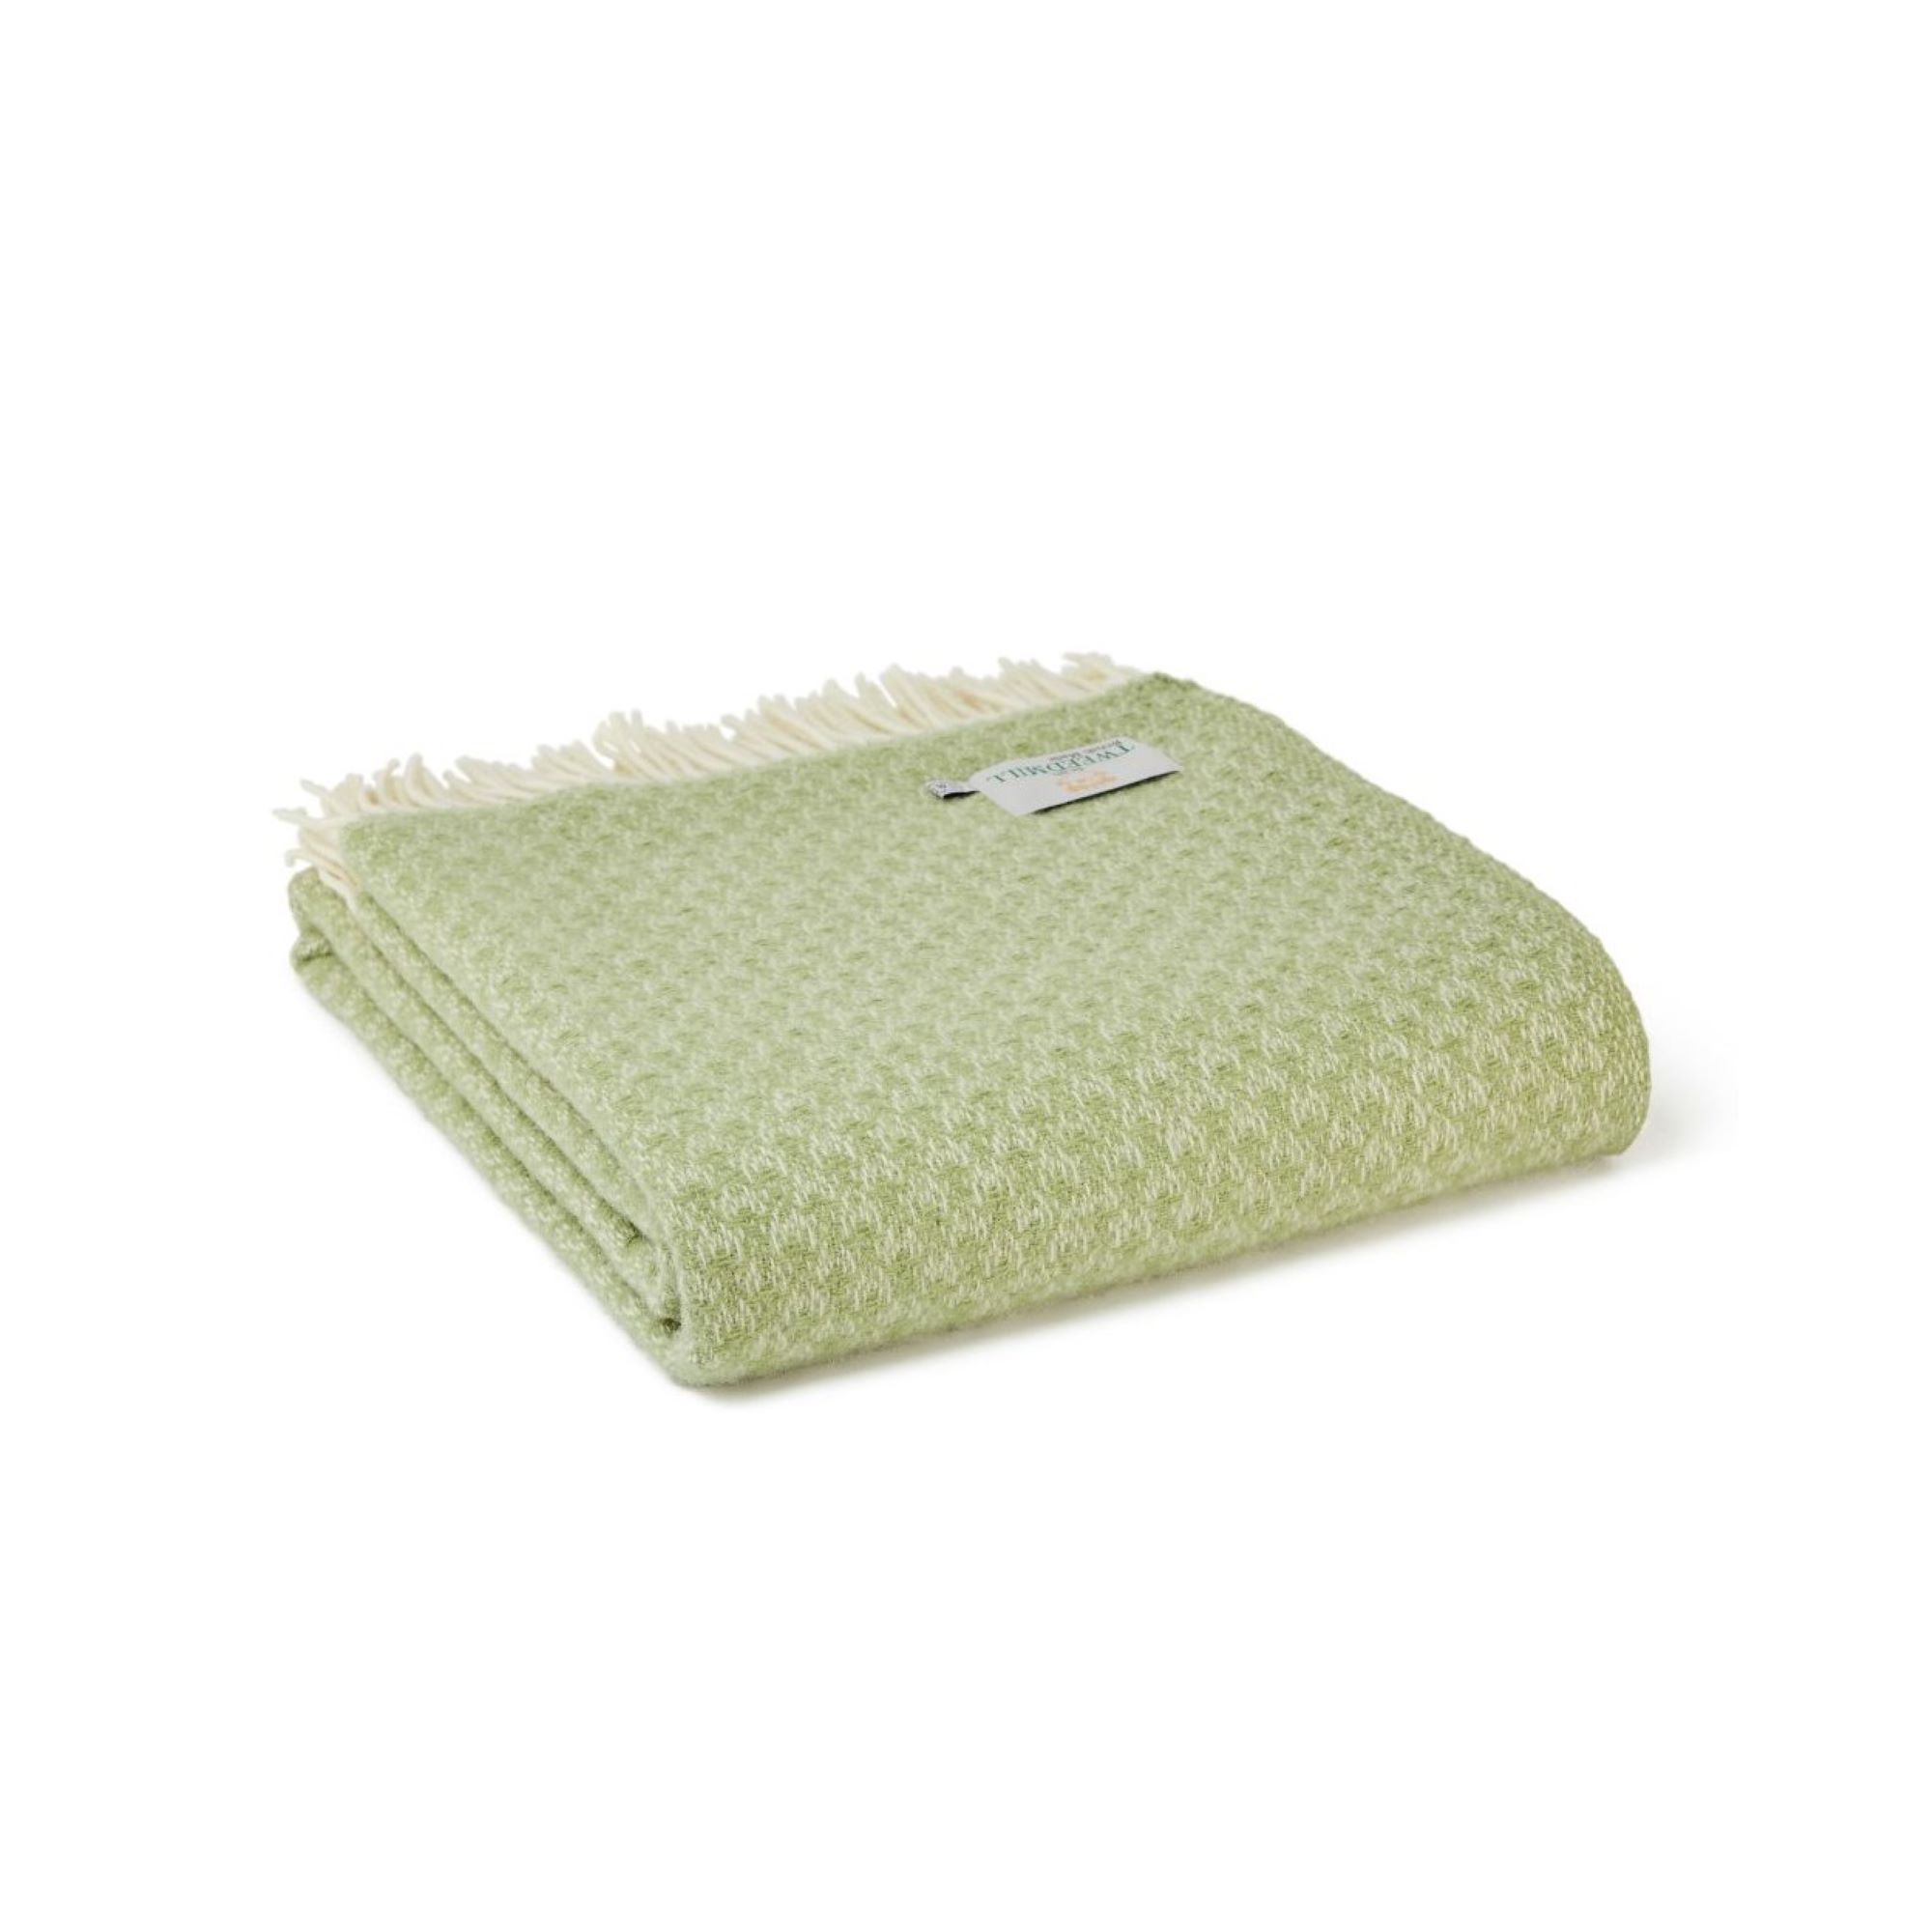 Tweedmill Textiles Isobel Crescent Pure New Wool Throw | Fern Green